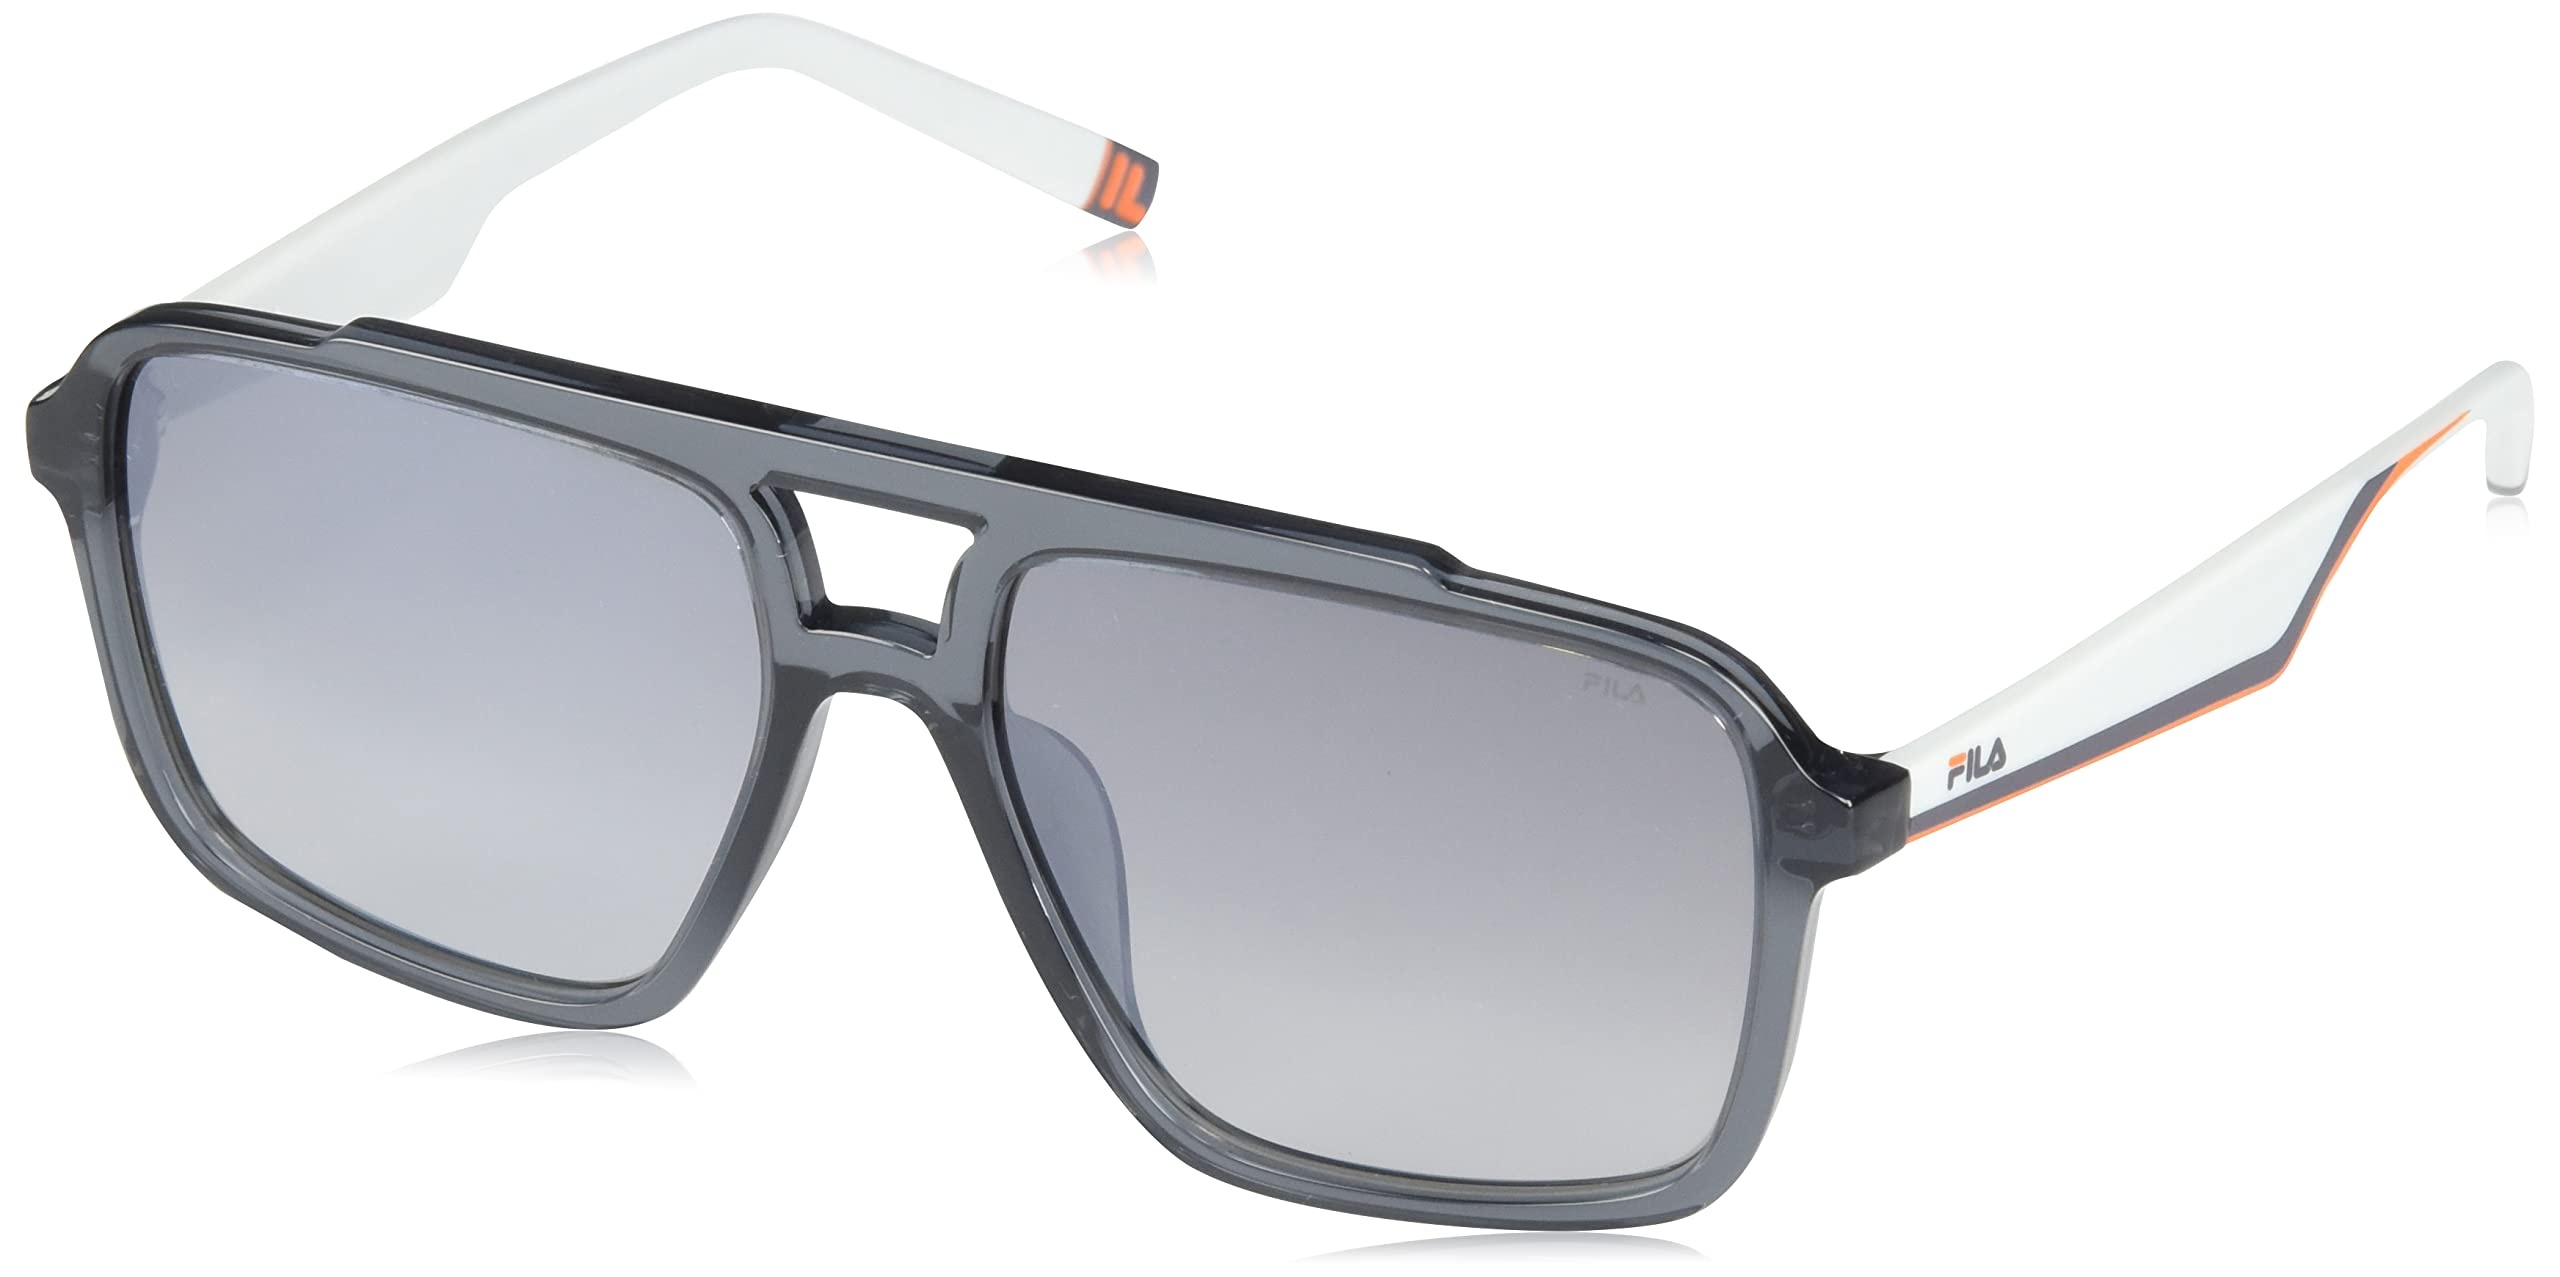 FILA Unisex SFI460 Sonnenbrille, Shiny Asphalt Grey